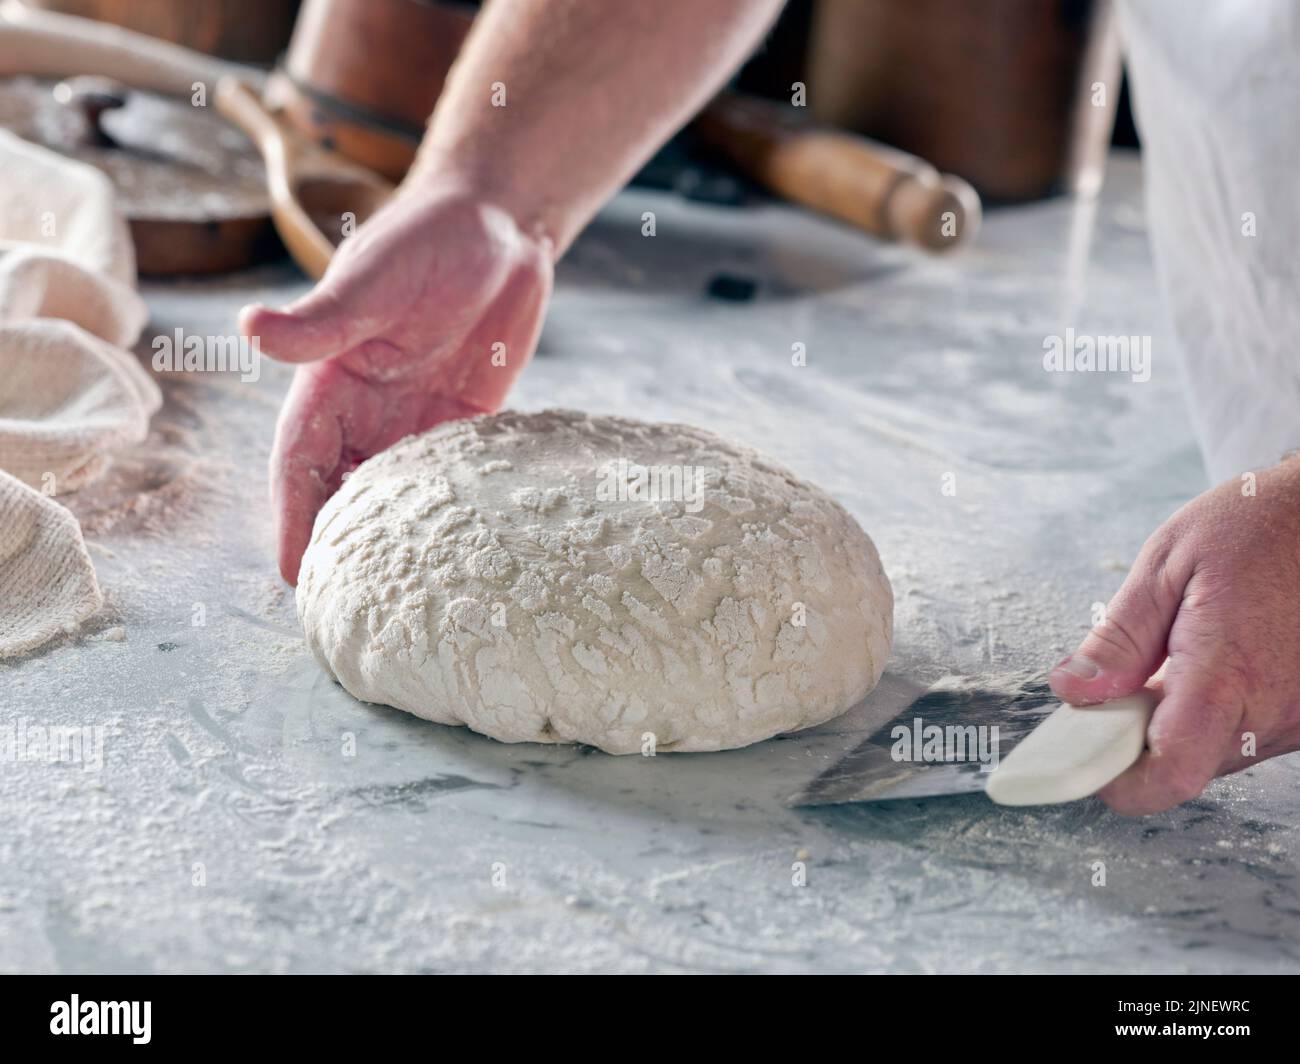 artisan bread making Stock Photo